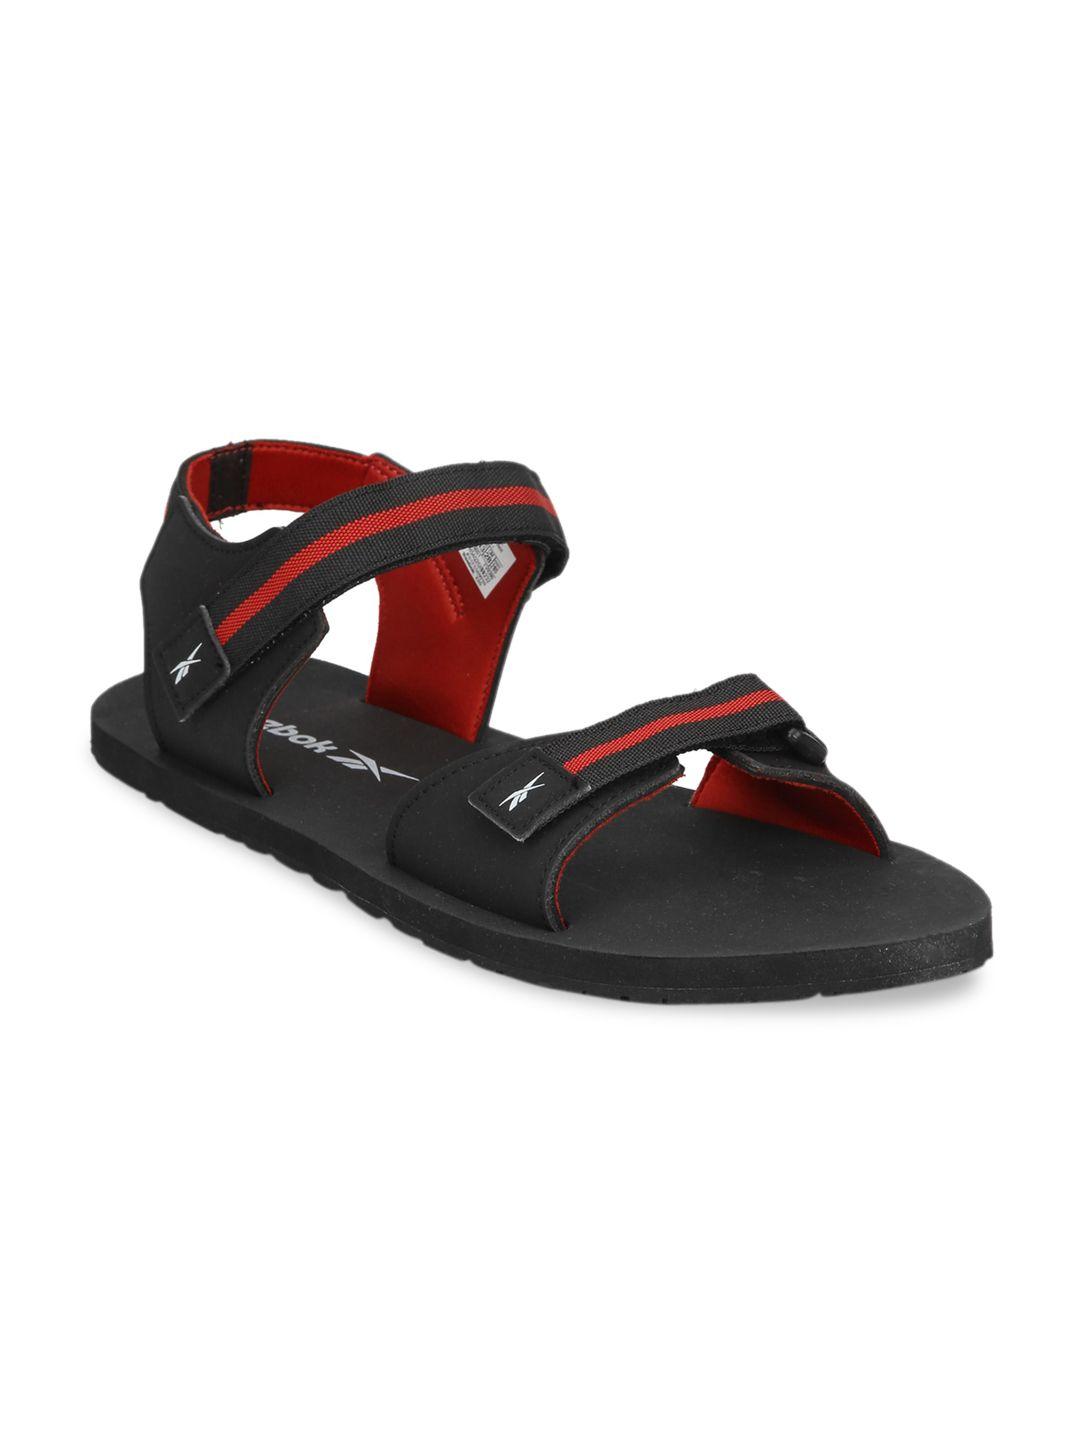 Reebok Men Black & Red Sports Sandals